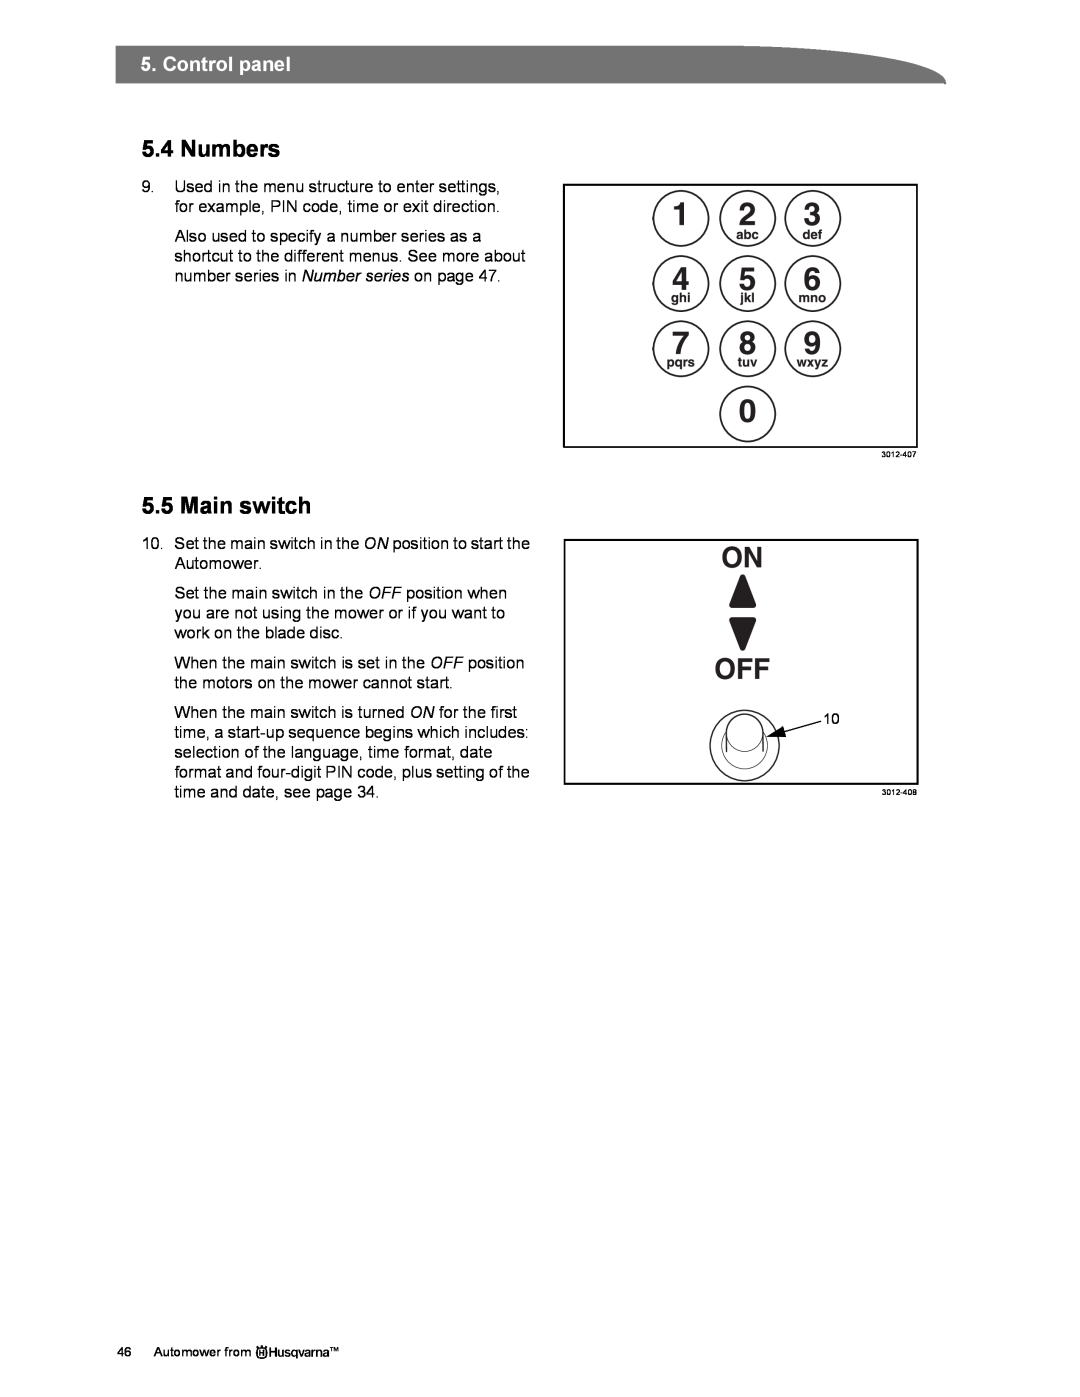 Husqvarna Automower manual 5.4Numbers, Main switch, Control panel 